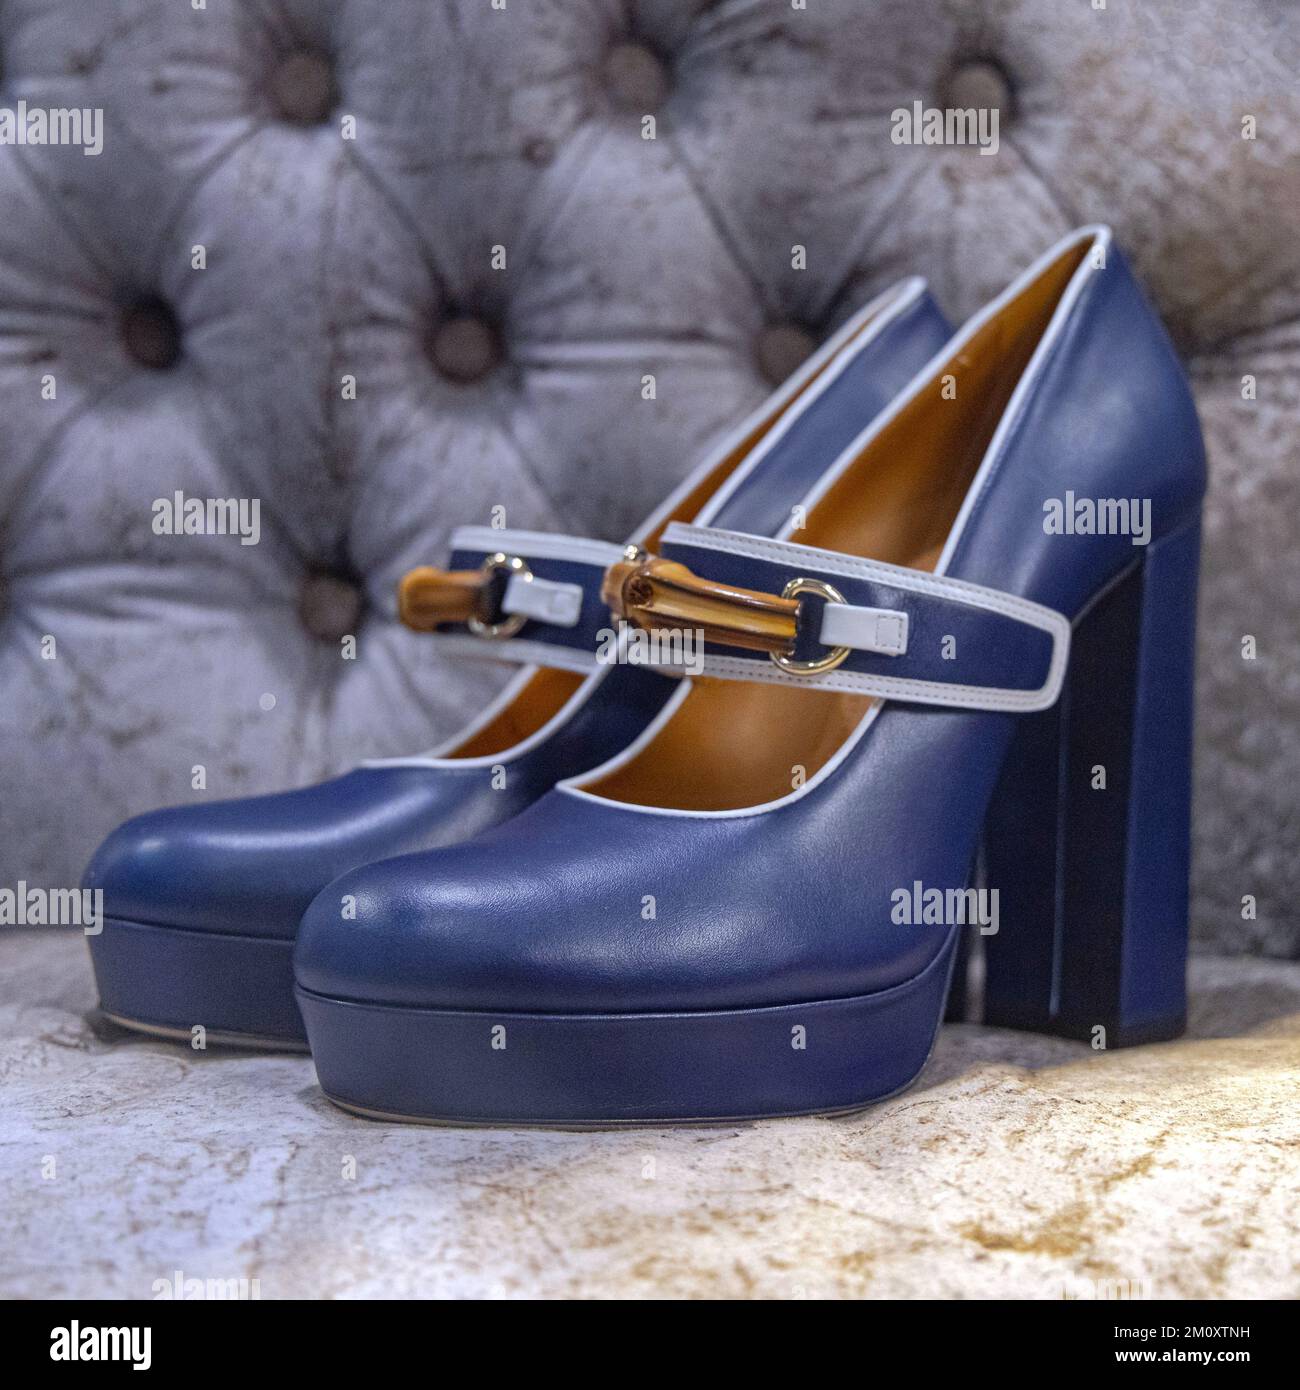 Pair of Stylish Navy Blue Platform Shoes at Sofa Stock Photo - Alamy